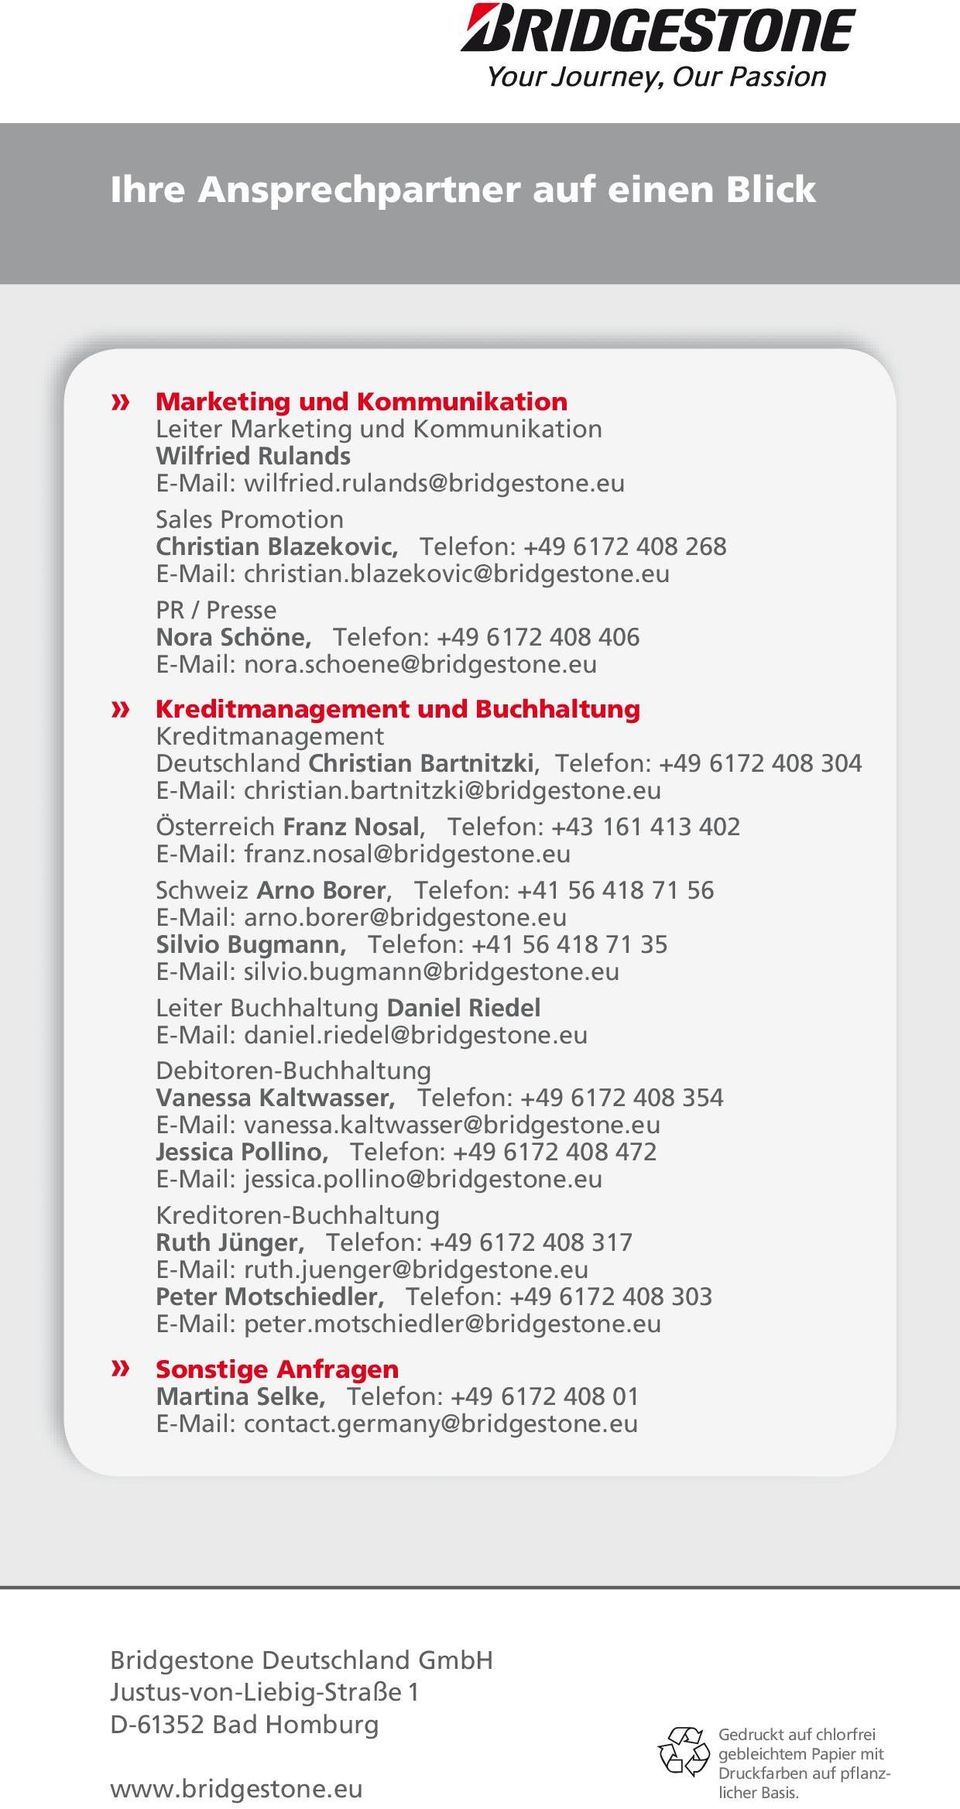 eu Kreditmanagement und Buchhaltung Kreditmanagement Deutschland Christian Bartnitzki, Telefon: +49 6172 408 304 E-Mail: christian.bartnitzki@bridgestone.